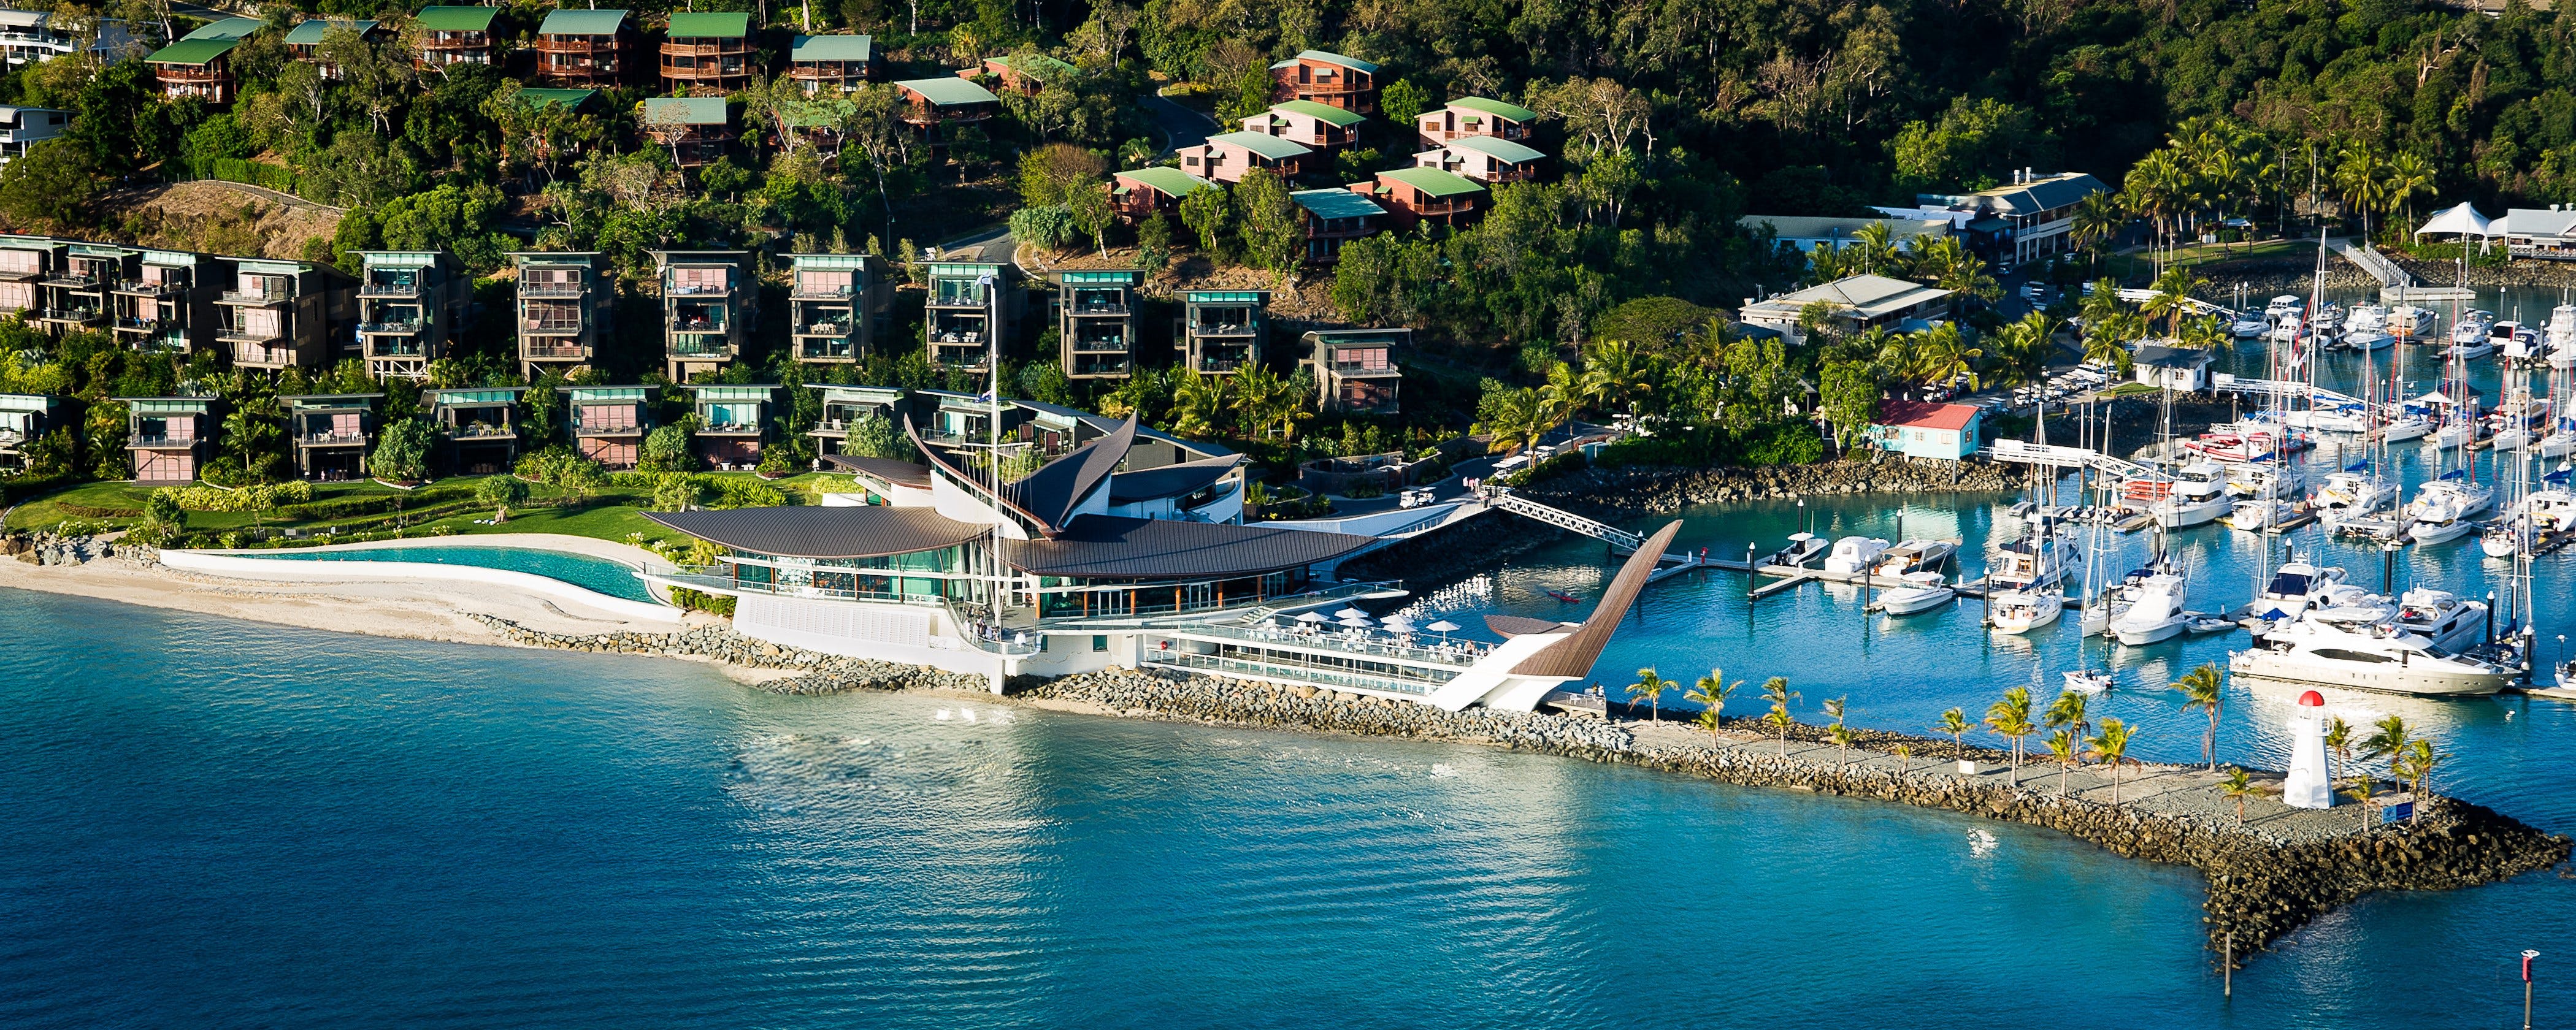 Hamilton Island Yacht Club - Tourism Adelaide